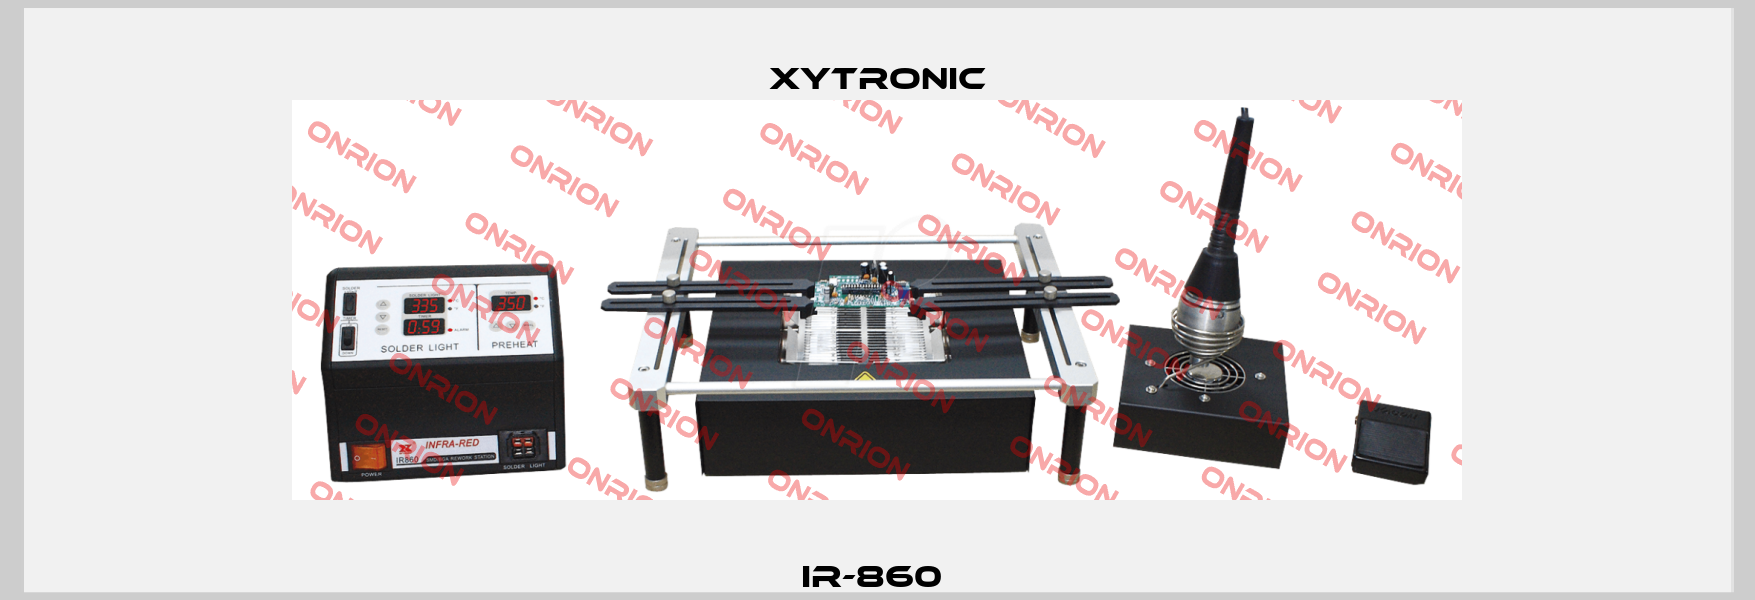 IR-860  Xytronic